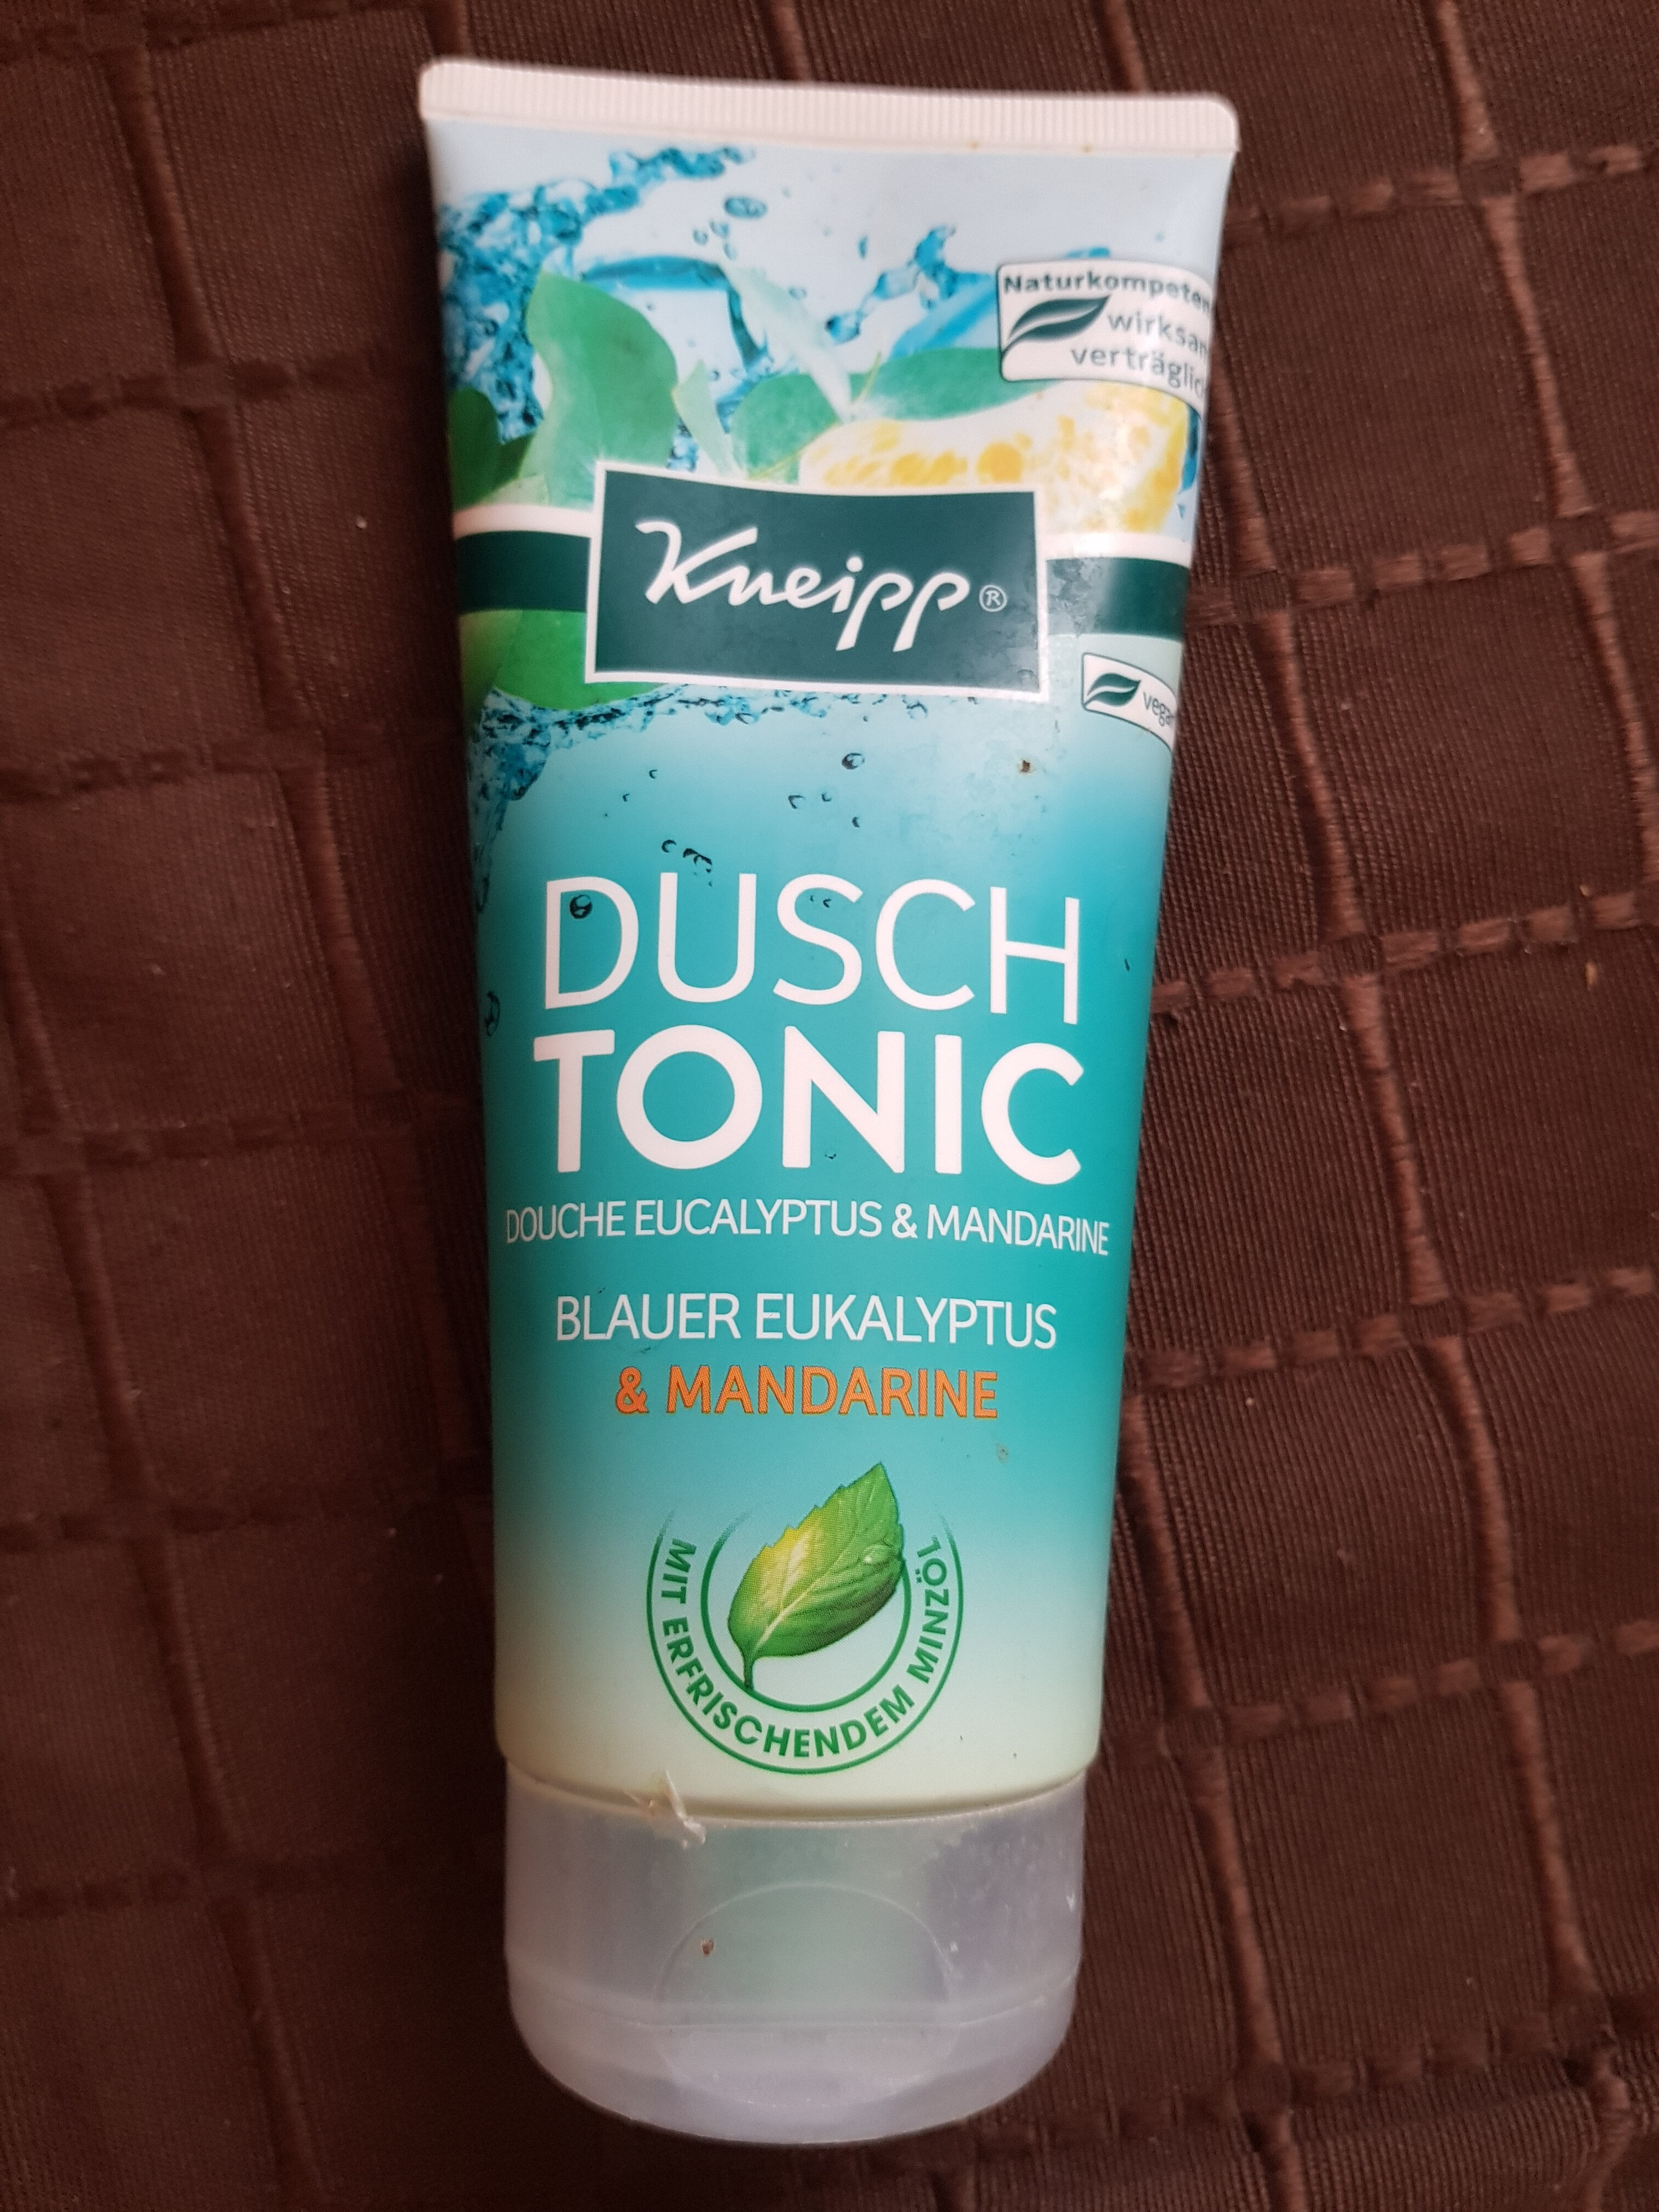 Kneipp Dusch Tonic, Blauer Eukalyptus & Mandarine - Product - de